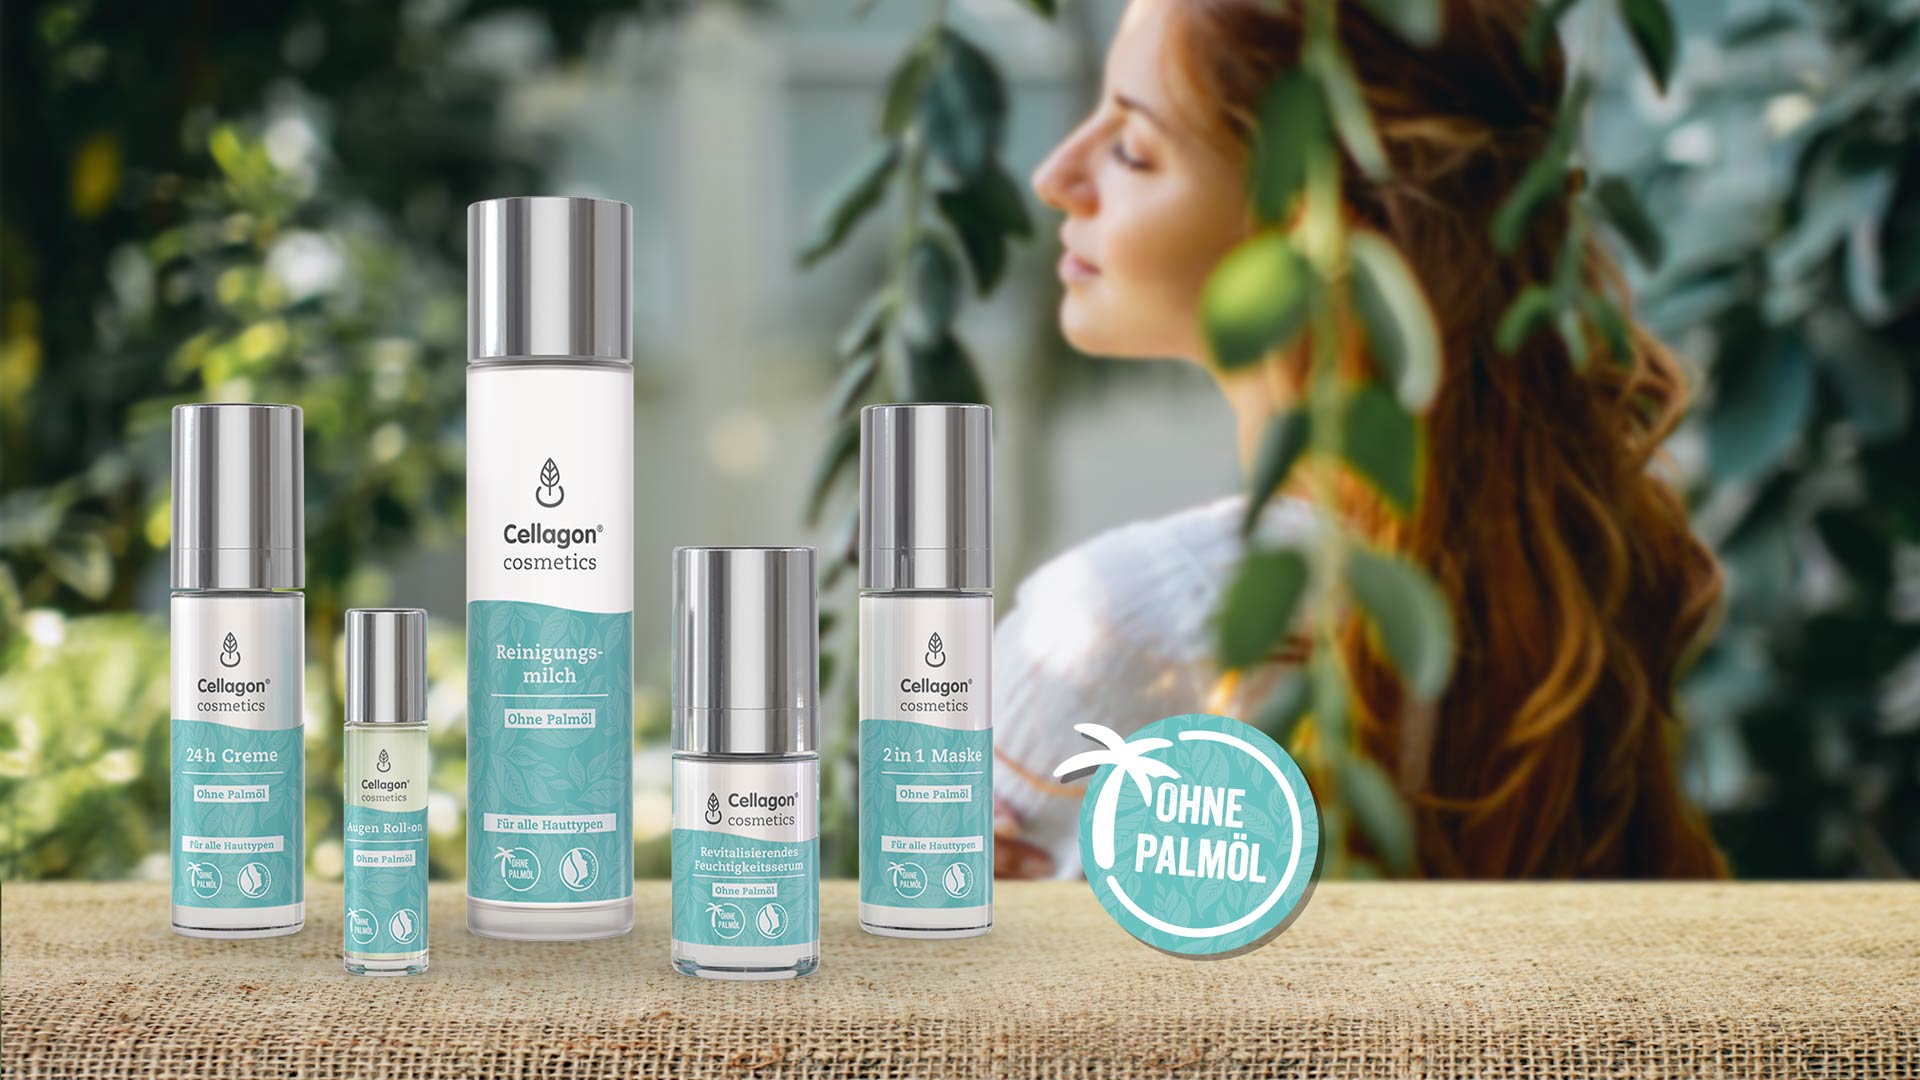 marktrausch für Cellagon: Cellagon cosmetics Kosmetik ohne Palmöl